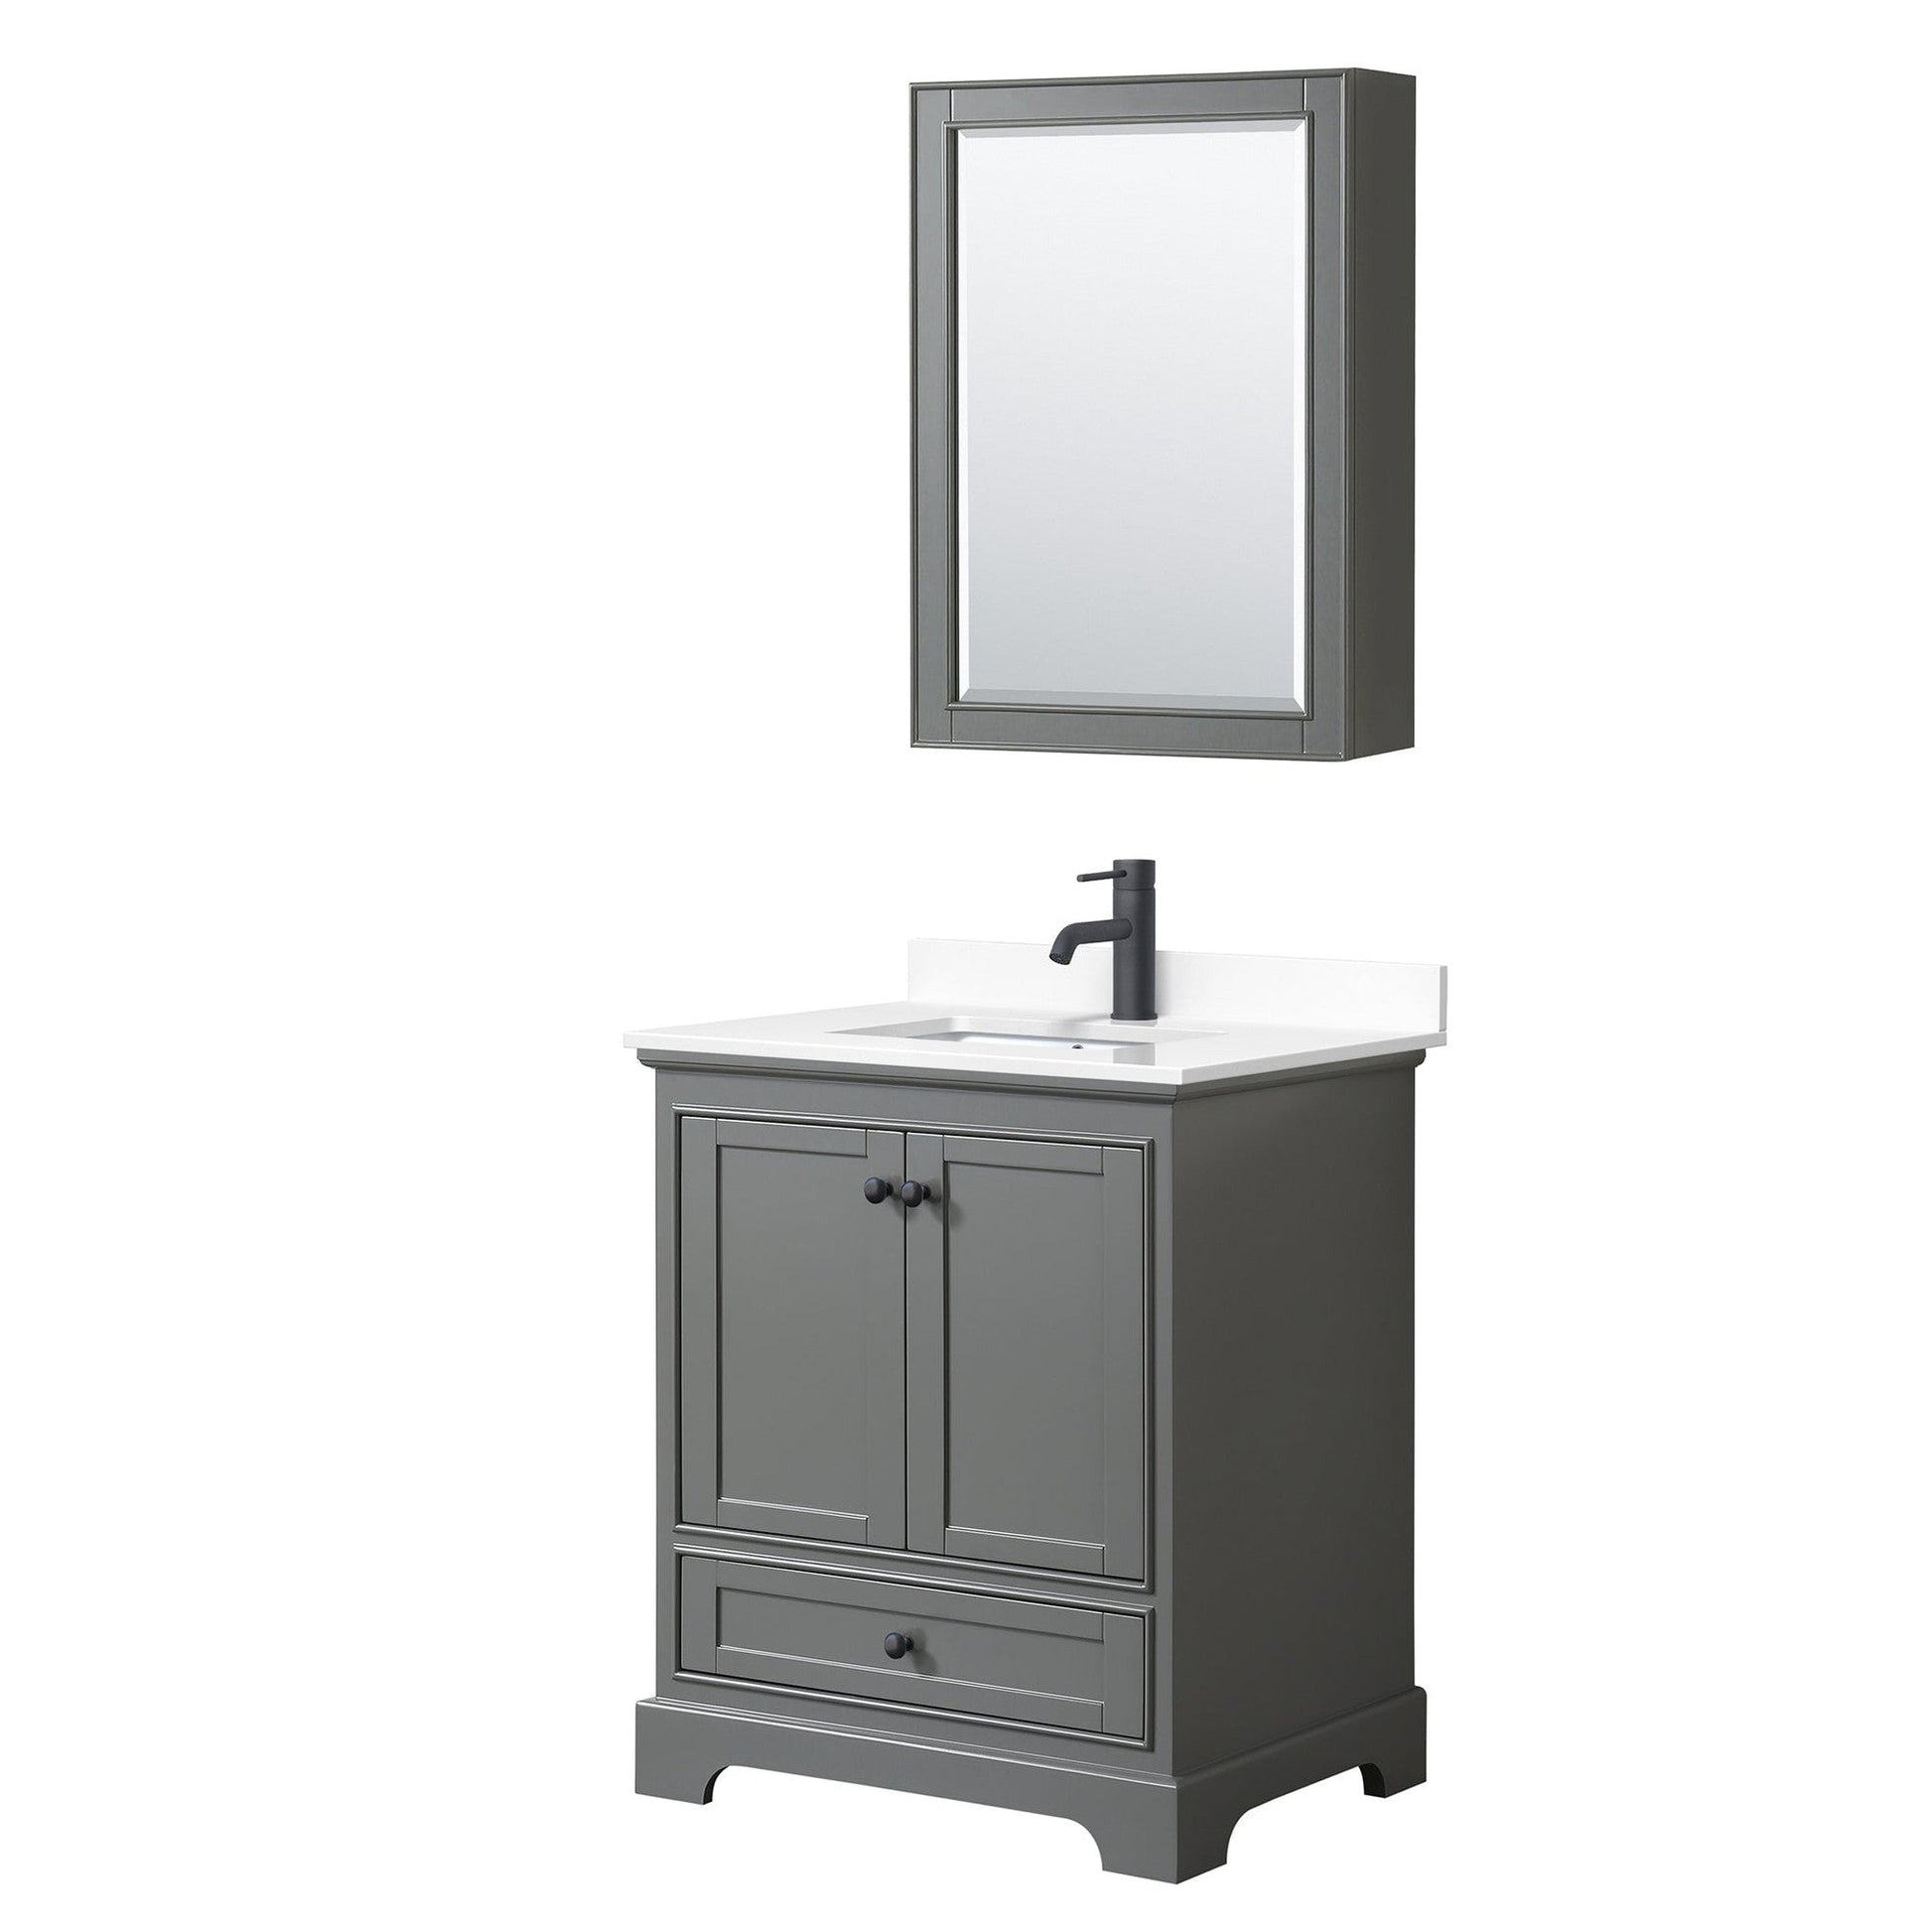 Deborah 30" Single Bathroom Vanity in Dark Gray, White Cultured Marble Countertop, Undermount Square Sink, Matte Black Trim, Medicine Cabinet